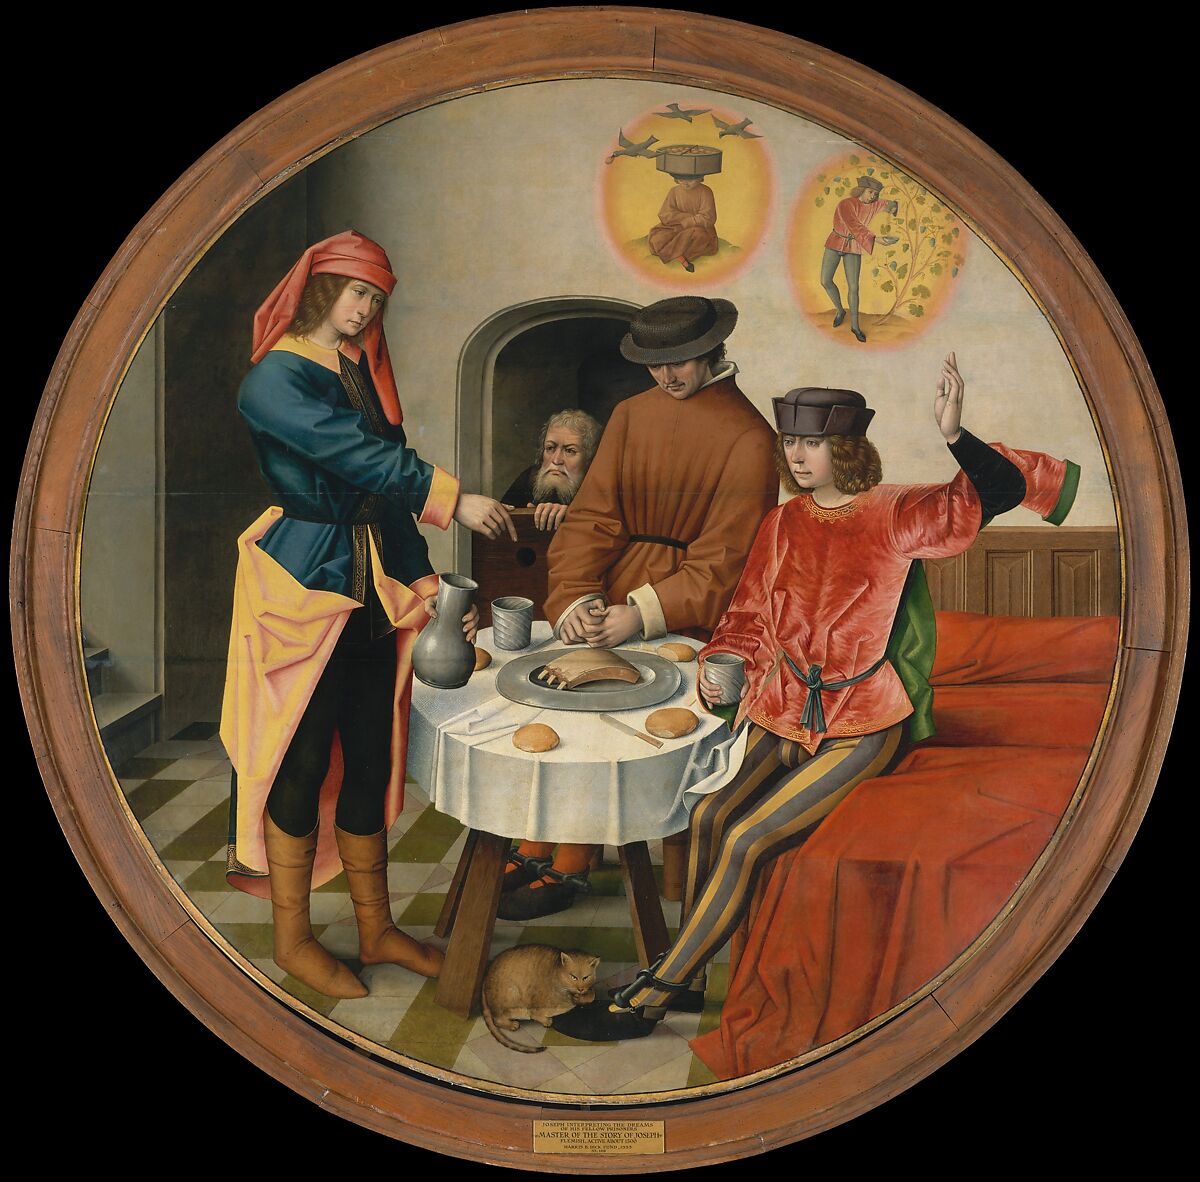 Joseph Interpreting the Dreams of His Fellow Prisoners, Master of the Story of Joseph  Netherlandish, Oil on wood